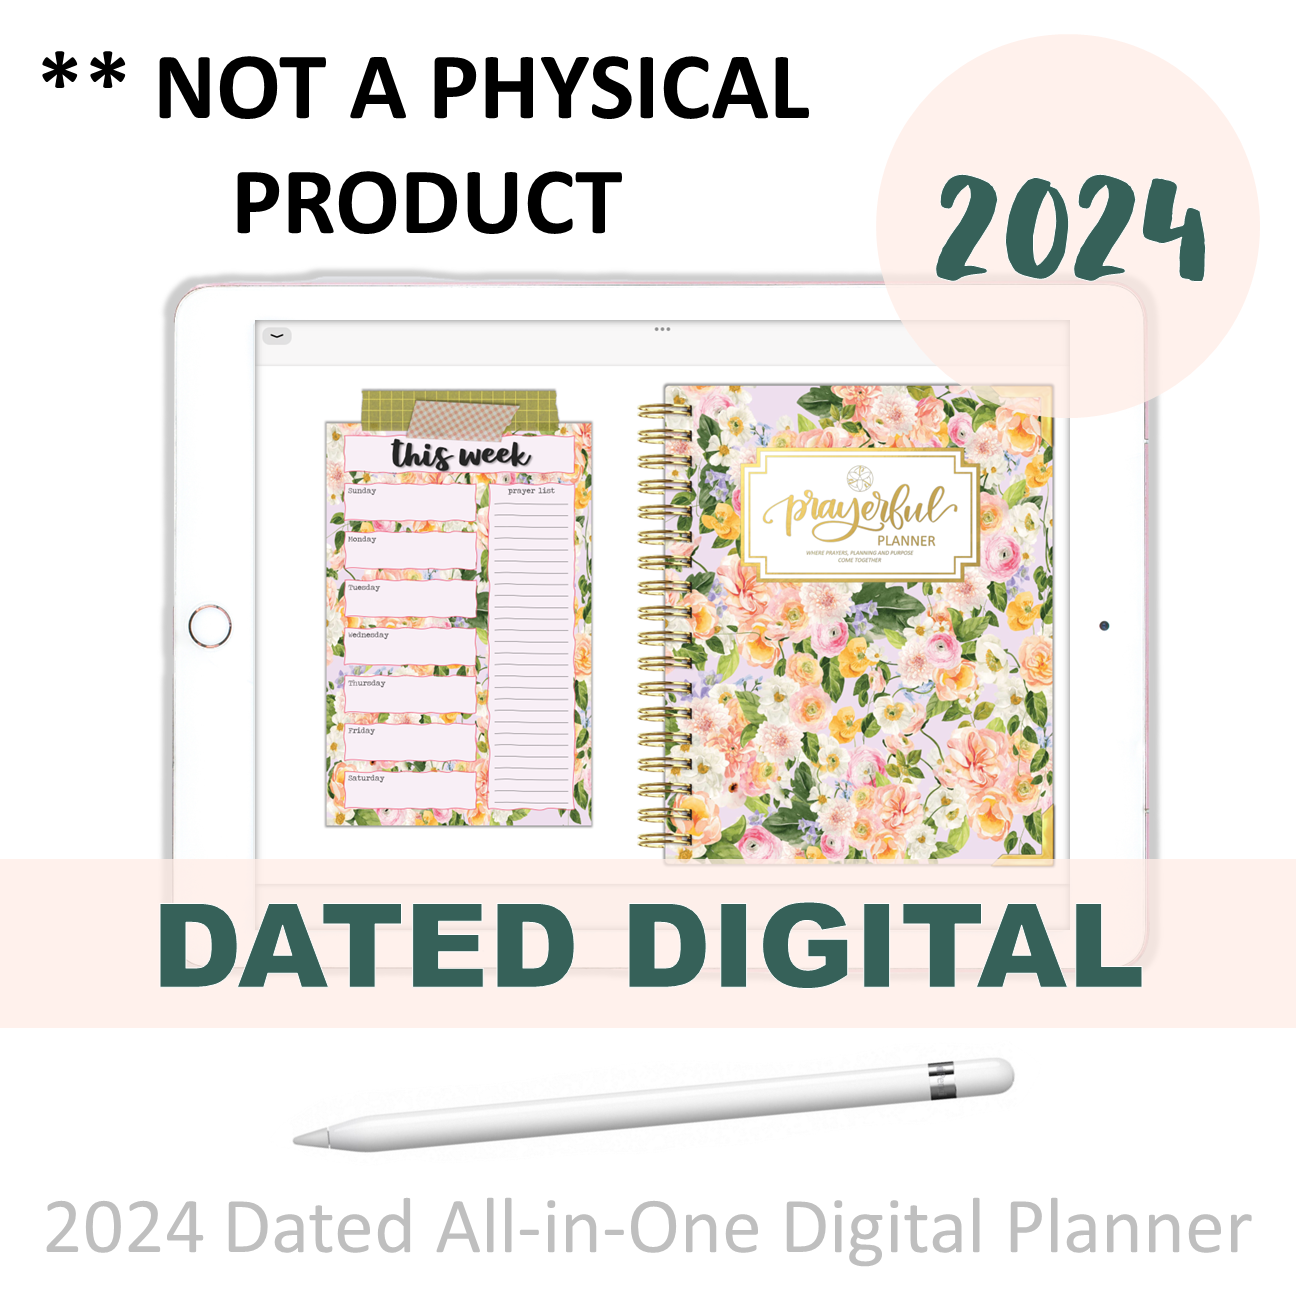 2024 Planners – Faith Planner